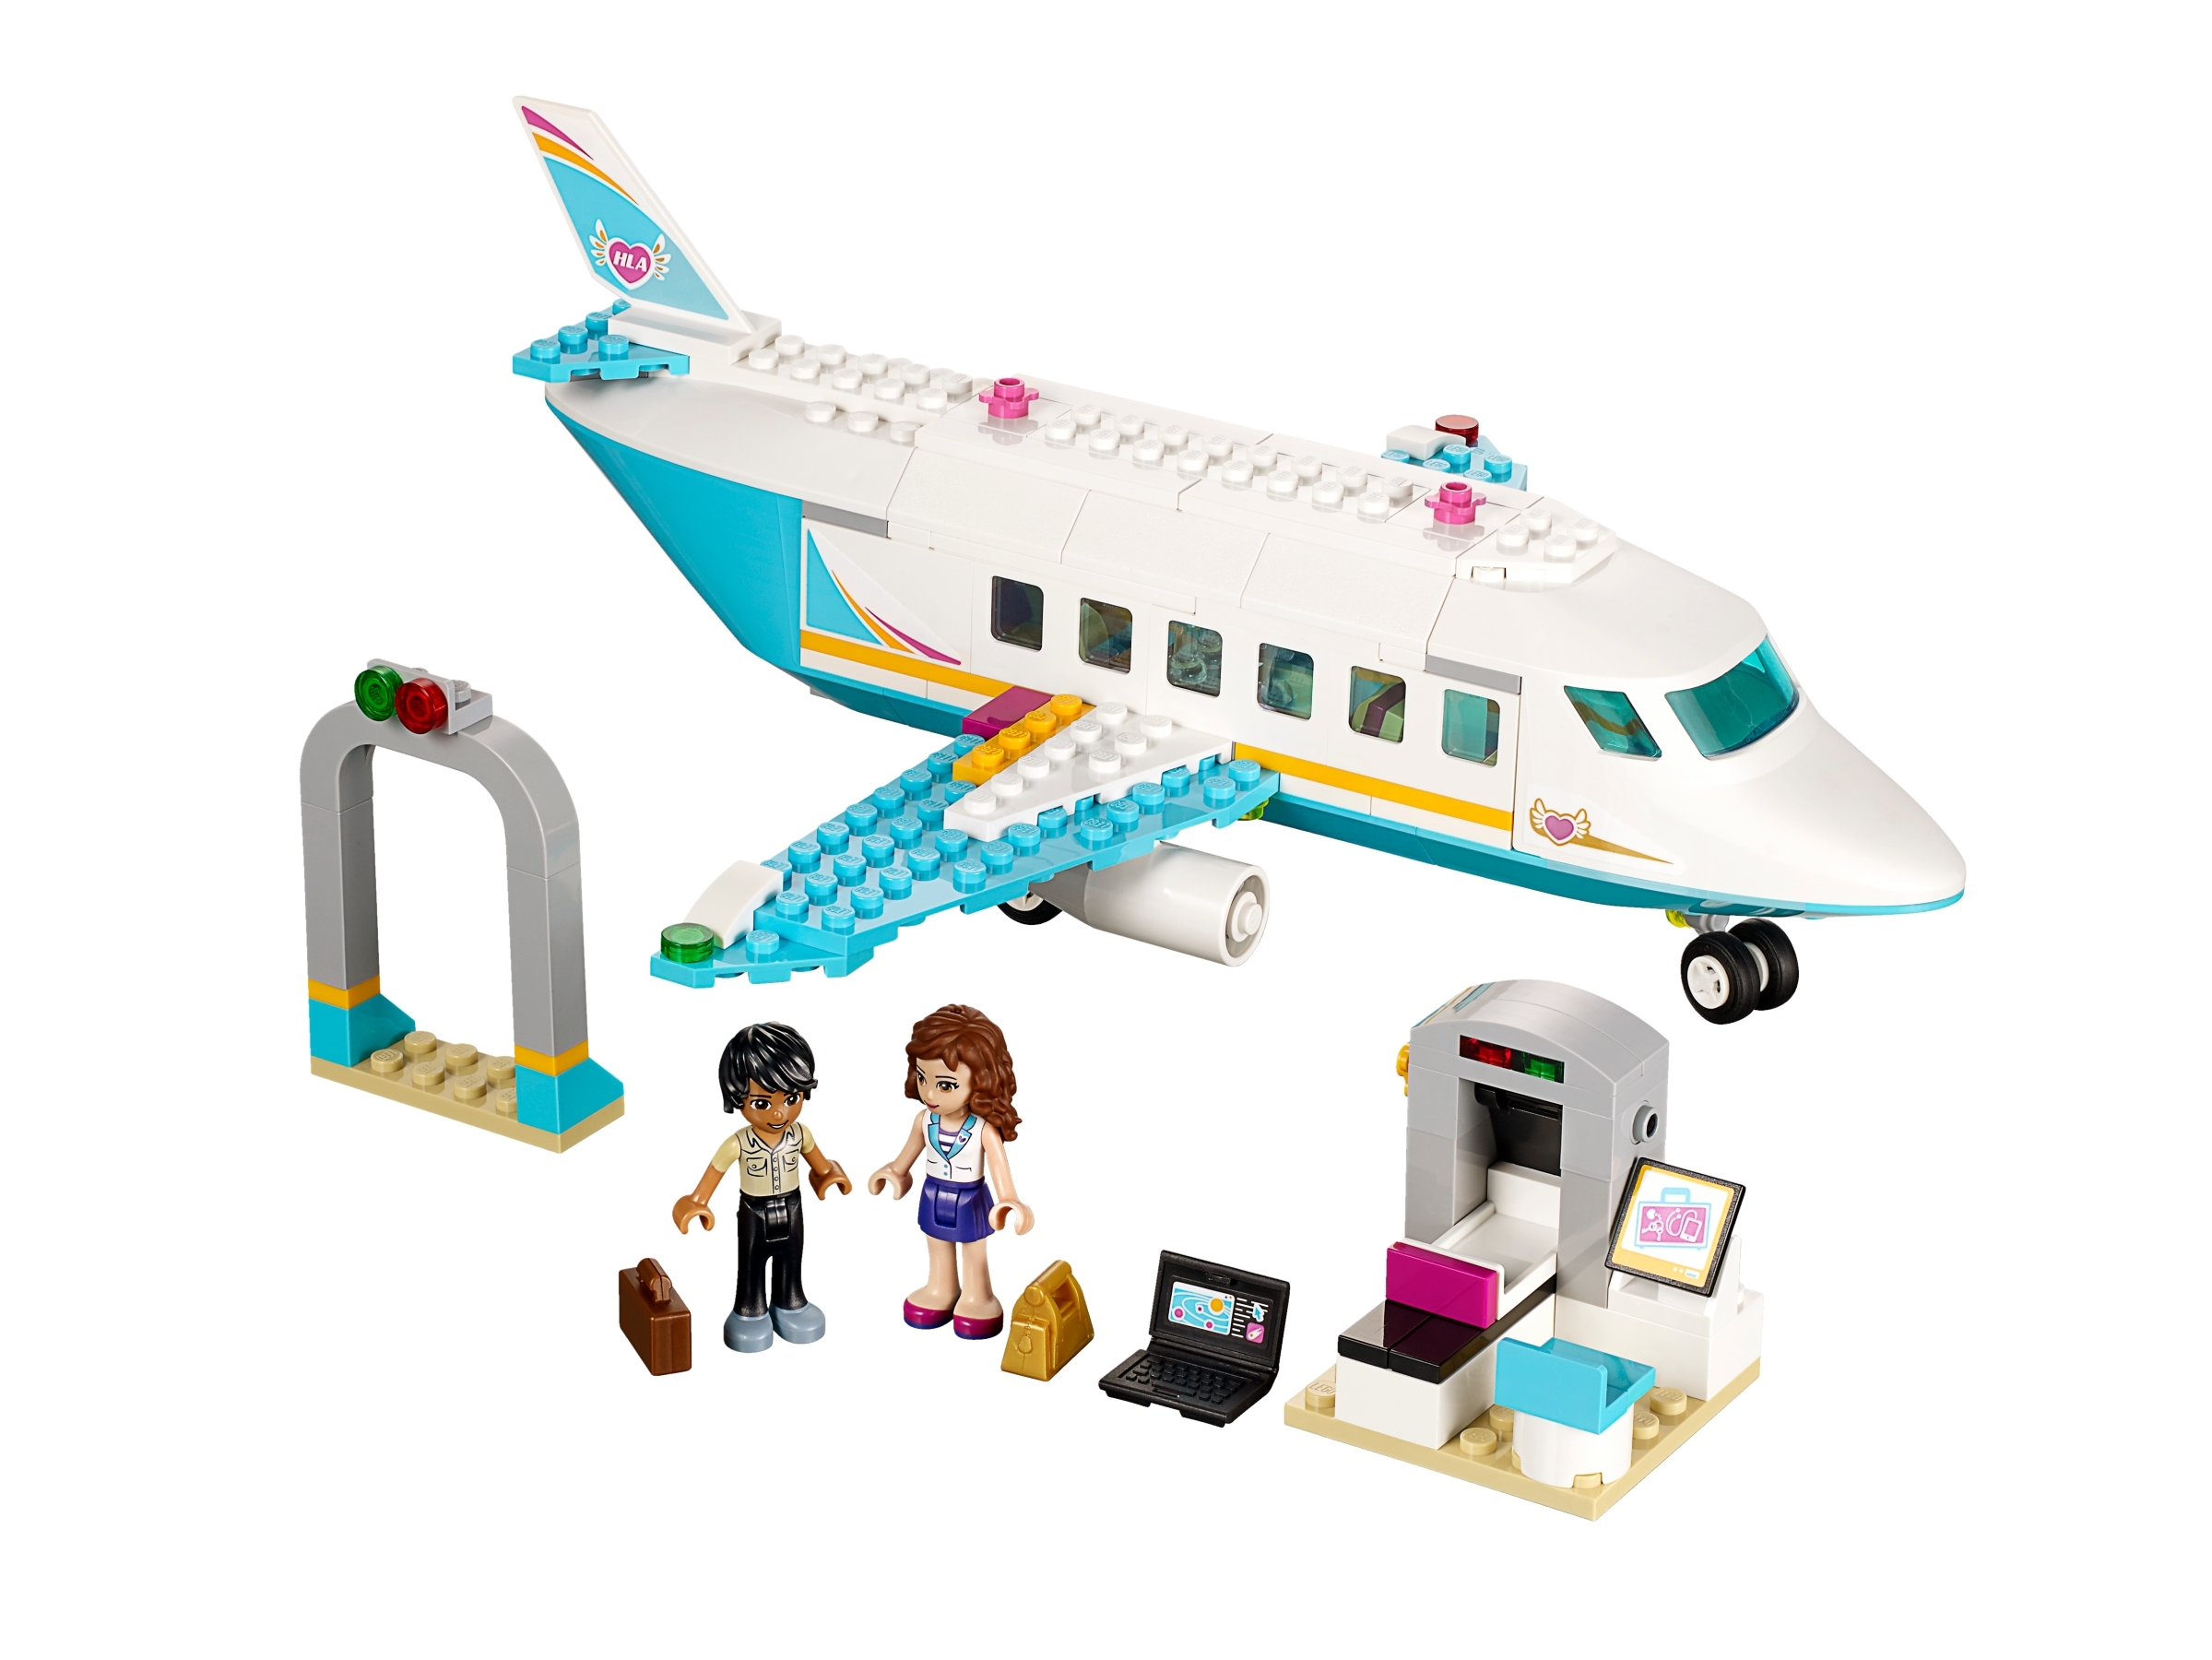 lego friends aeroplane set